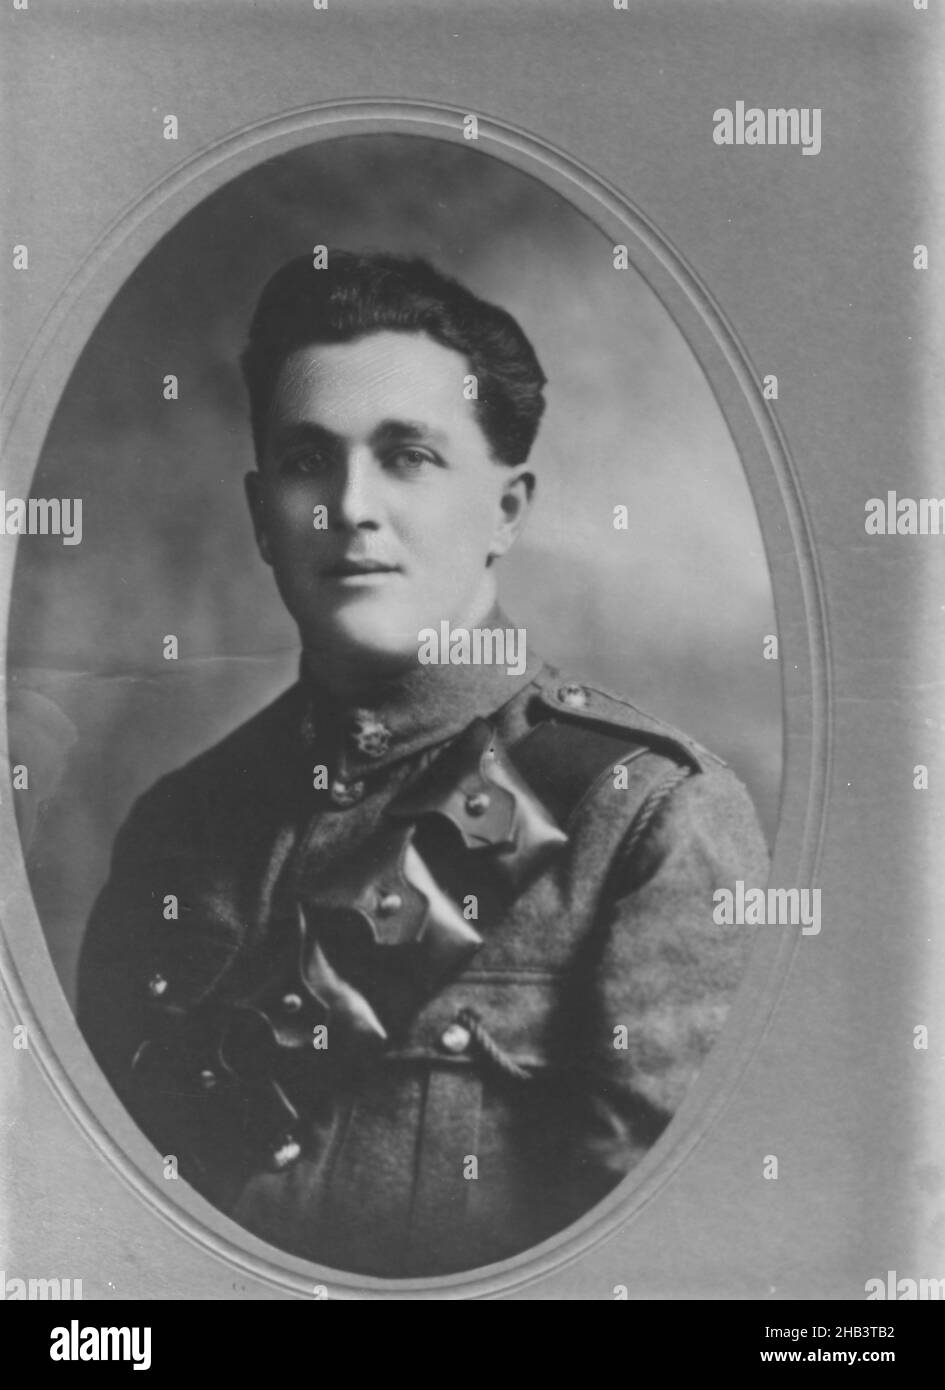 Kopie eines Soldaten-Portraits, Inschrift: „rides“, „Berry & Co“, Kopist, um 1920, Wellington Stockfoto